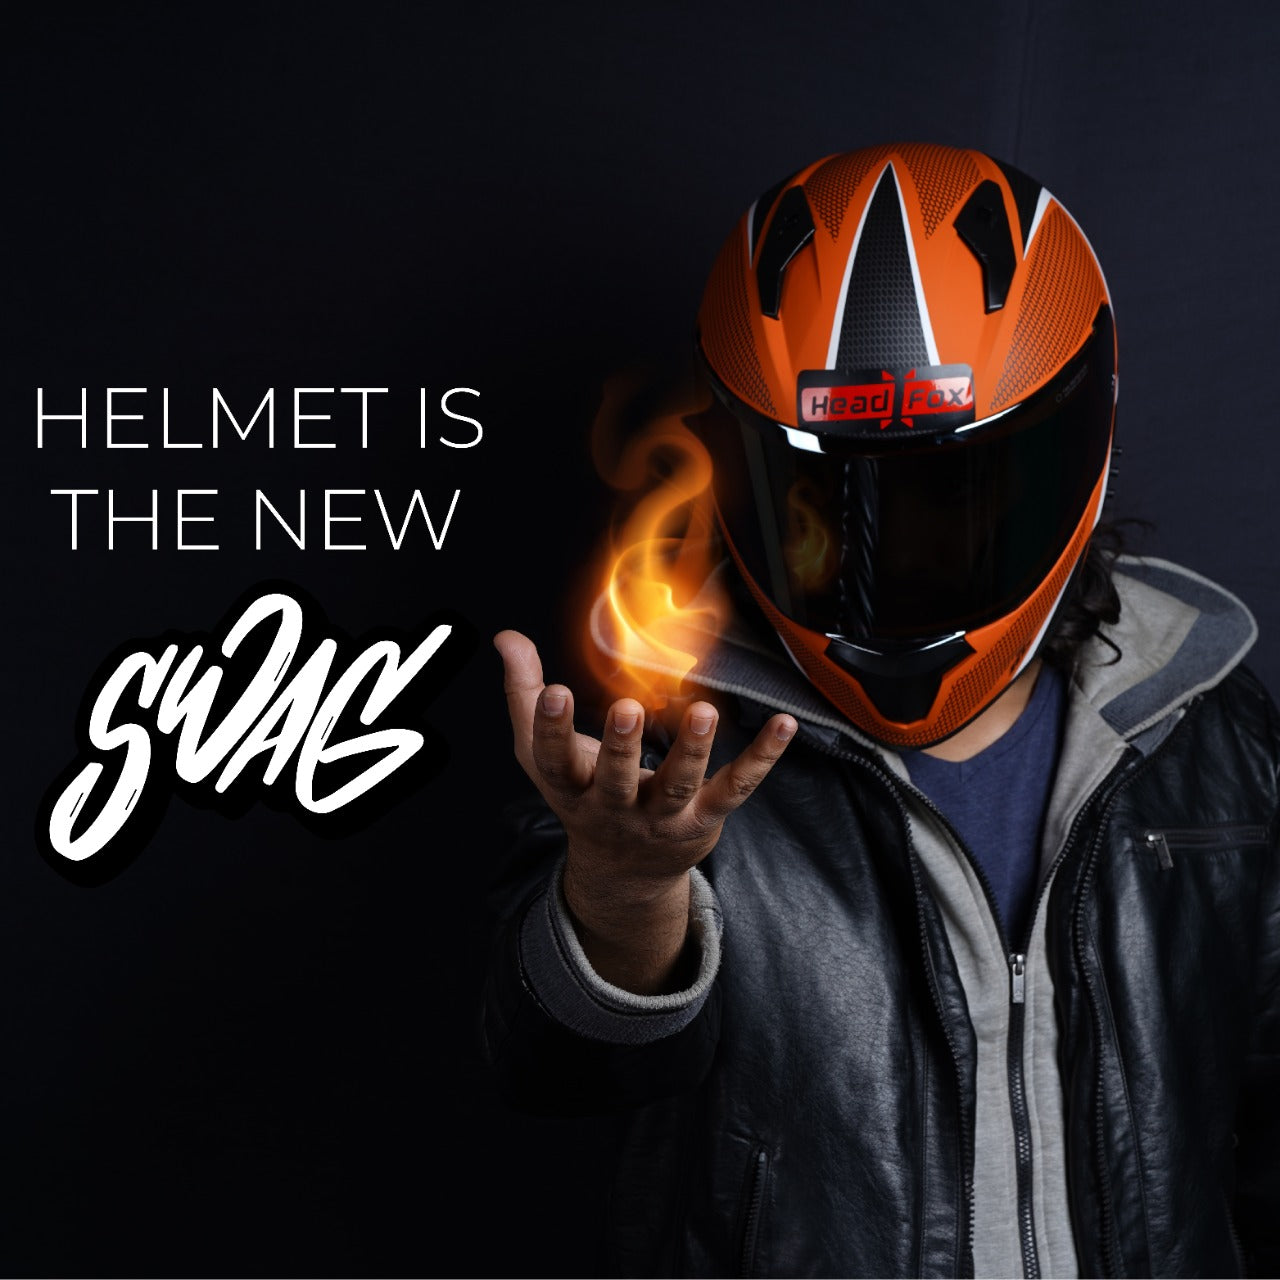 H4 Air Assasin Glossy Yellow Smart Bluetooth Full-face Double Visor Helmet